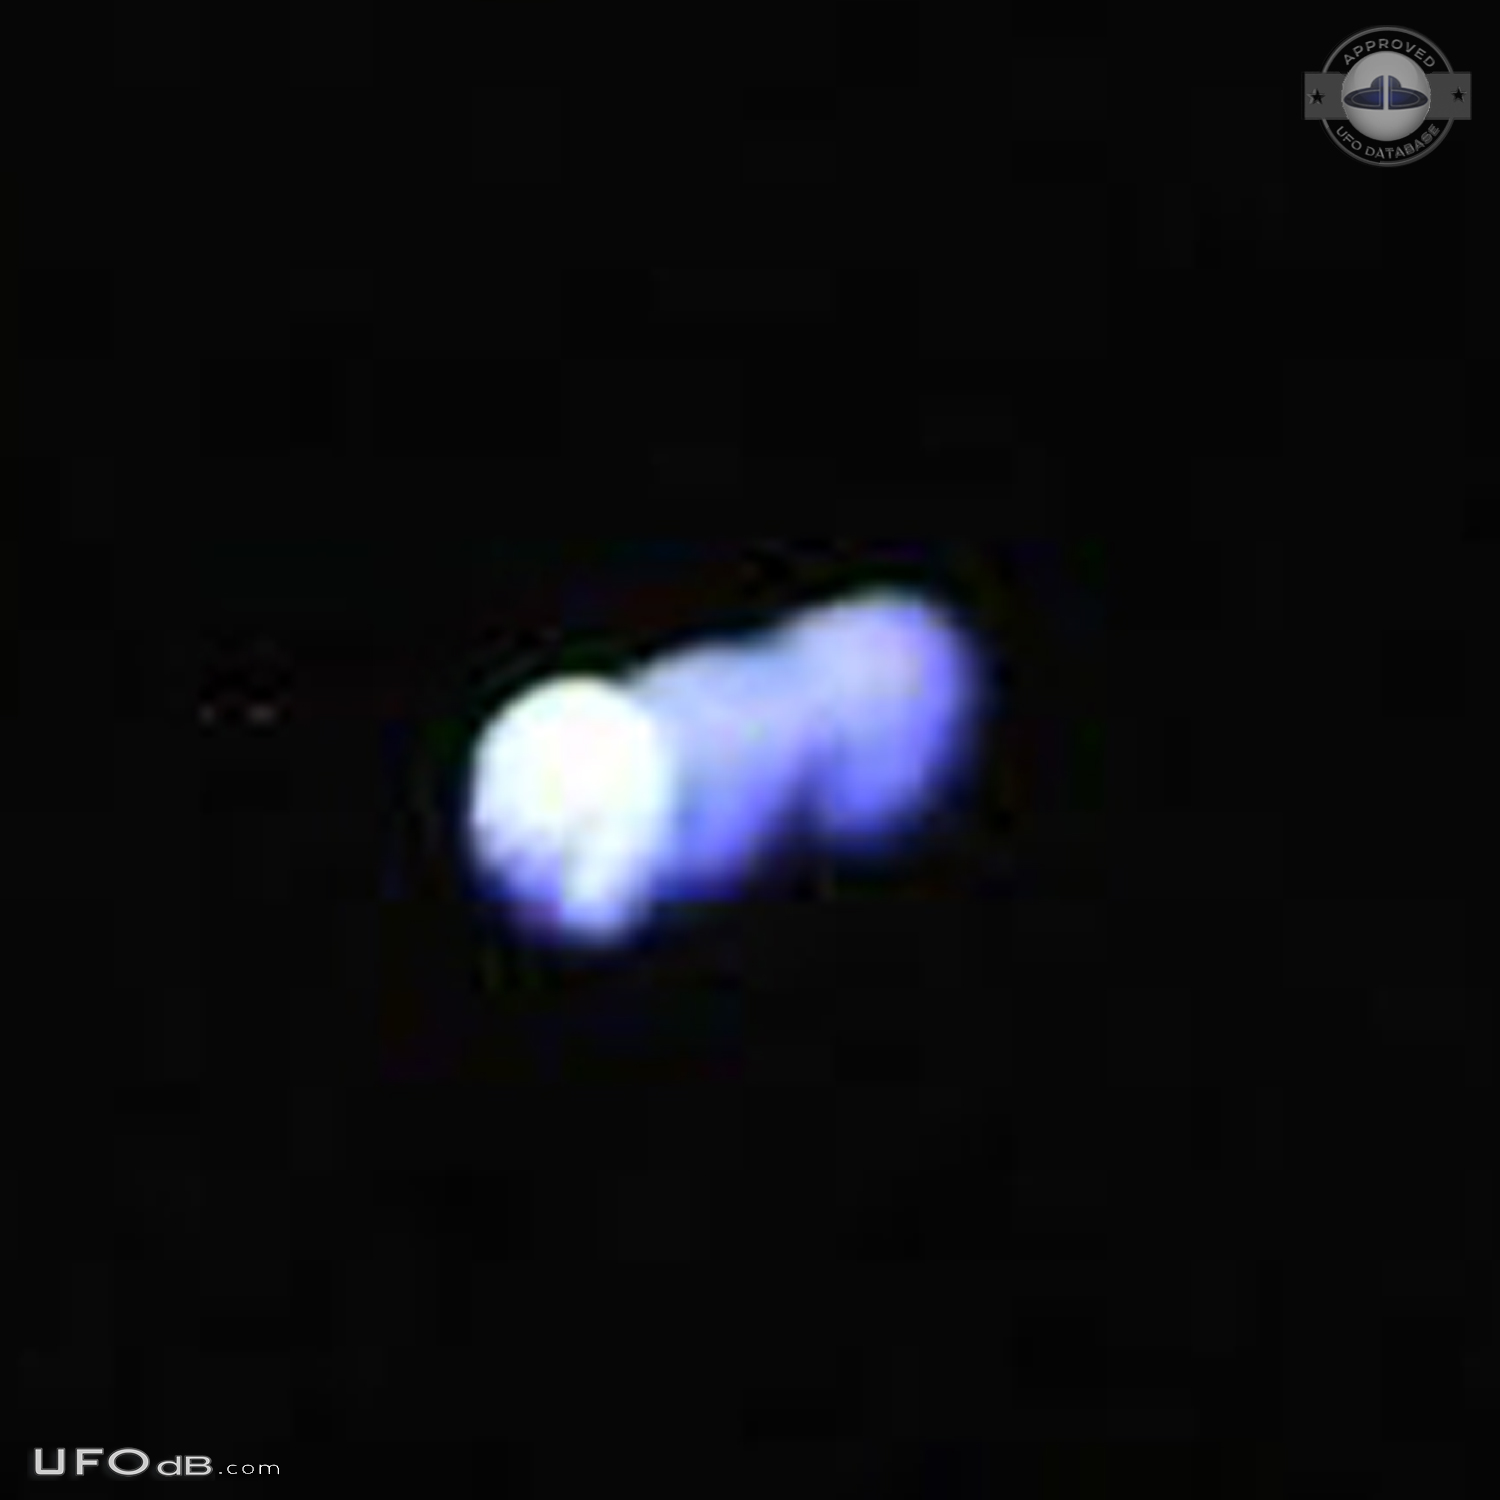 Floating blinking light UFO in the corn field - Lebanon Ohio USA 2014 UFO Picture #690-4